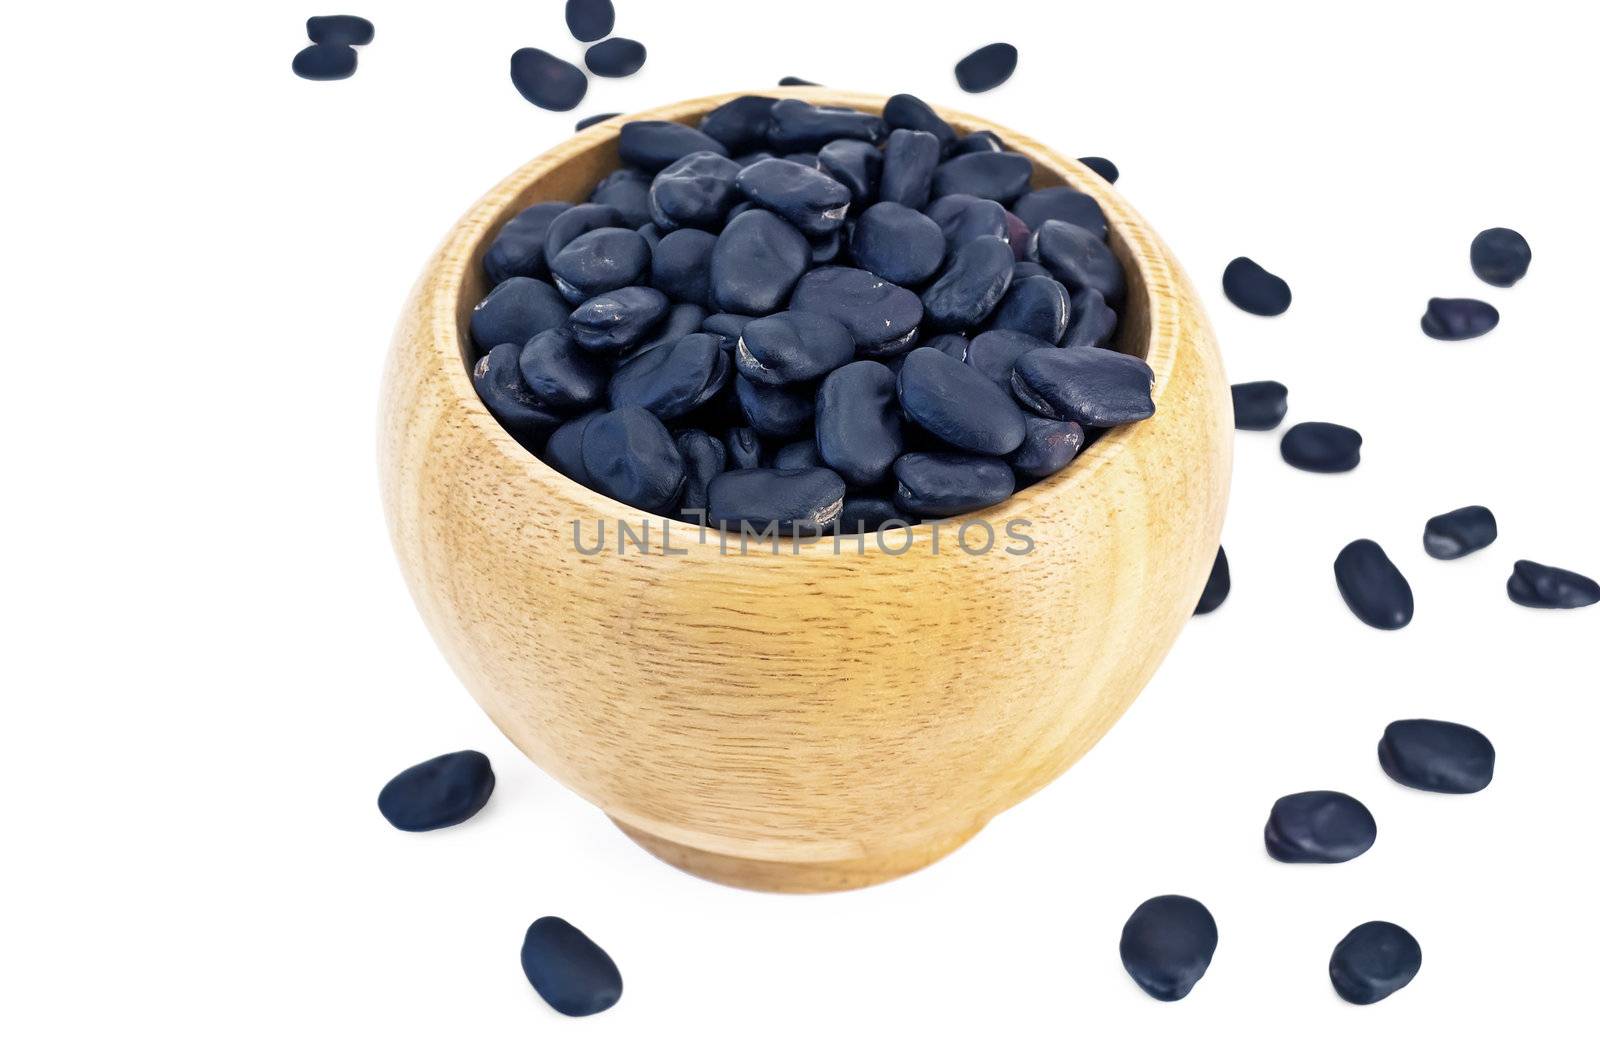 Black beans in a wooden bowl by rezkrr